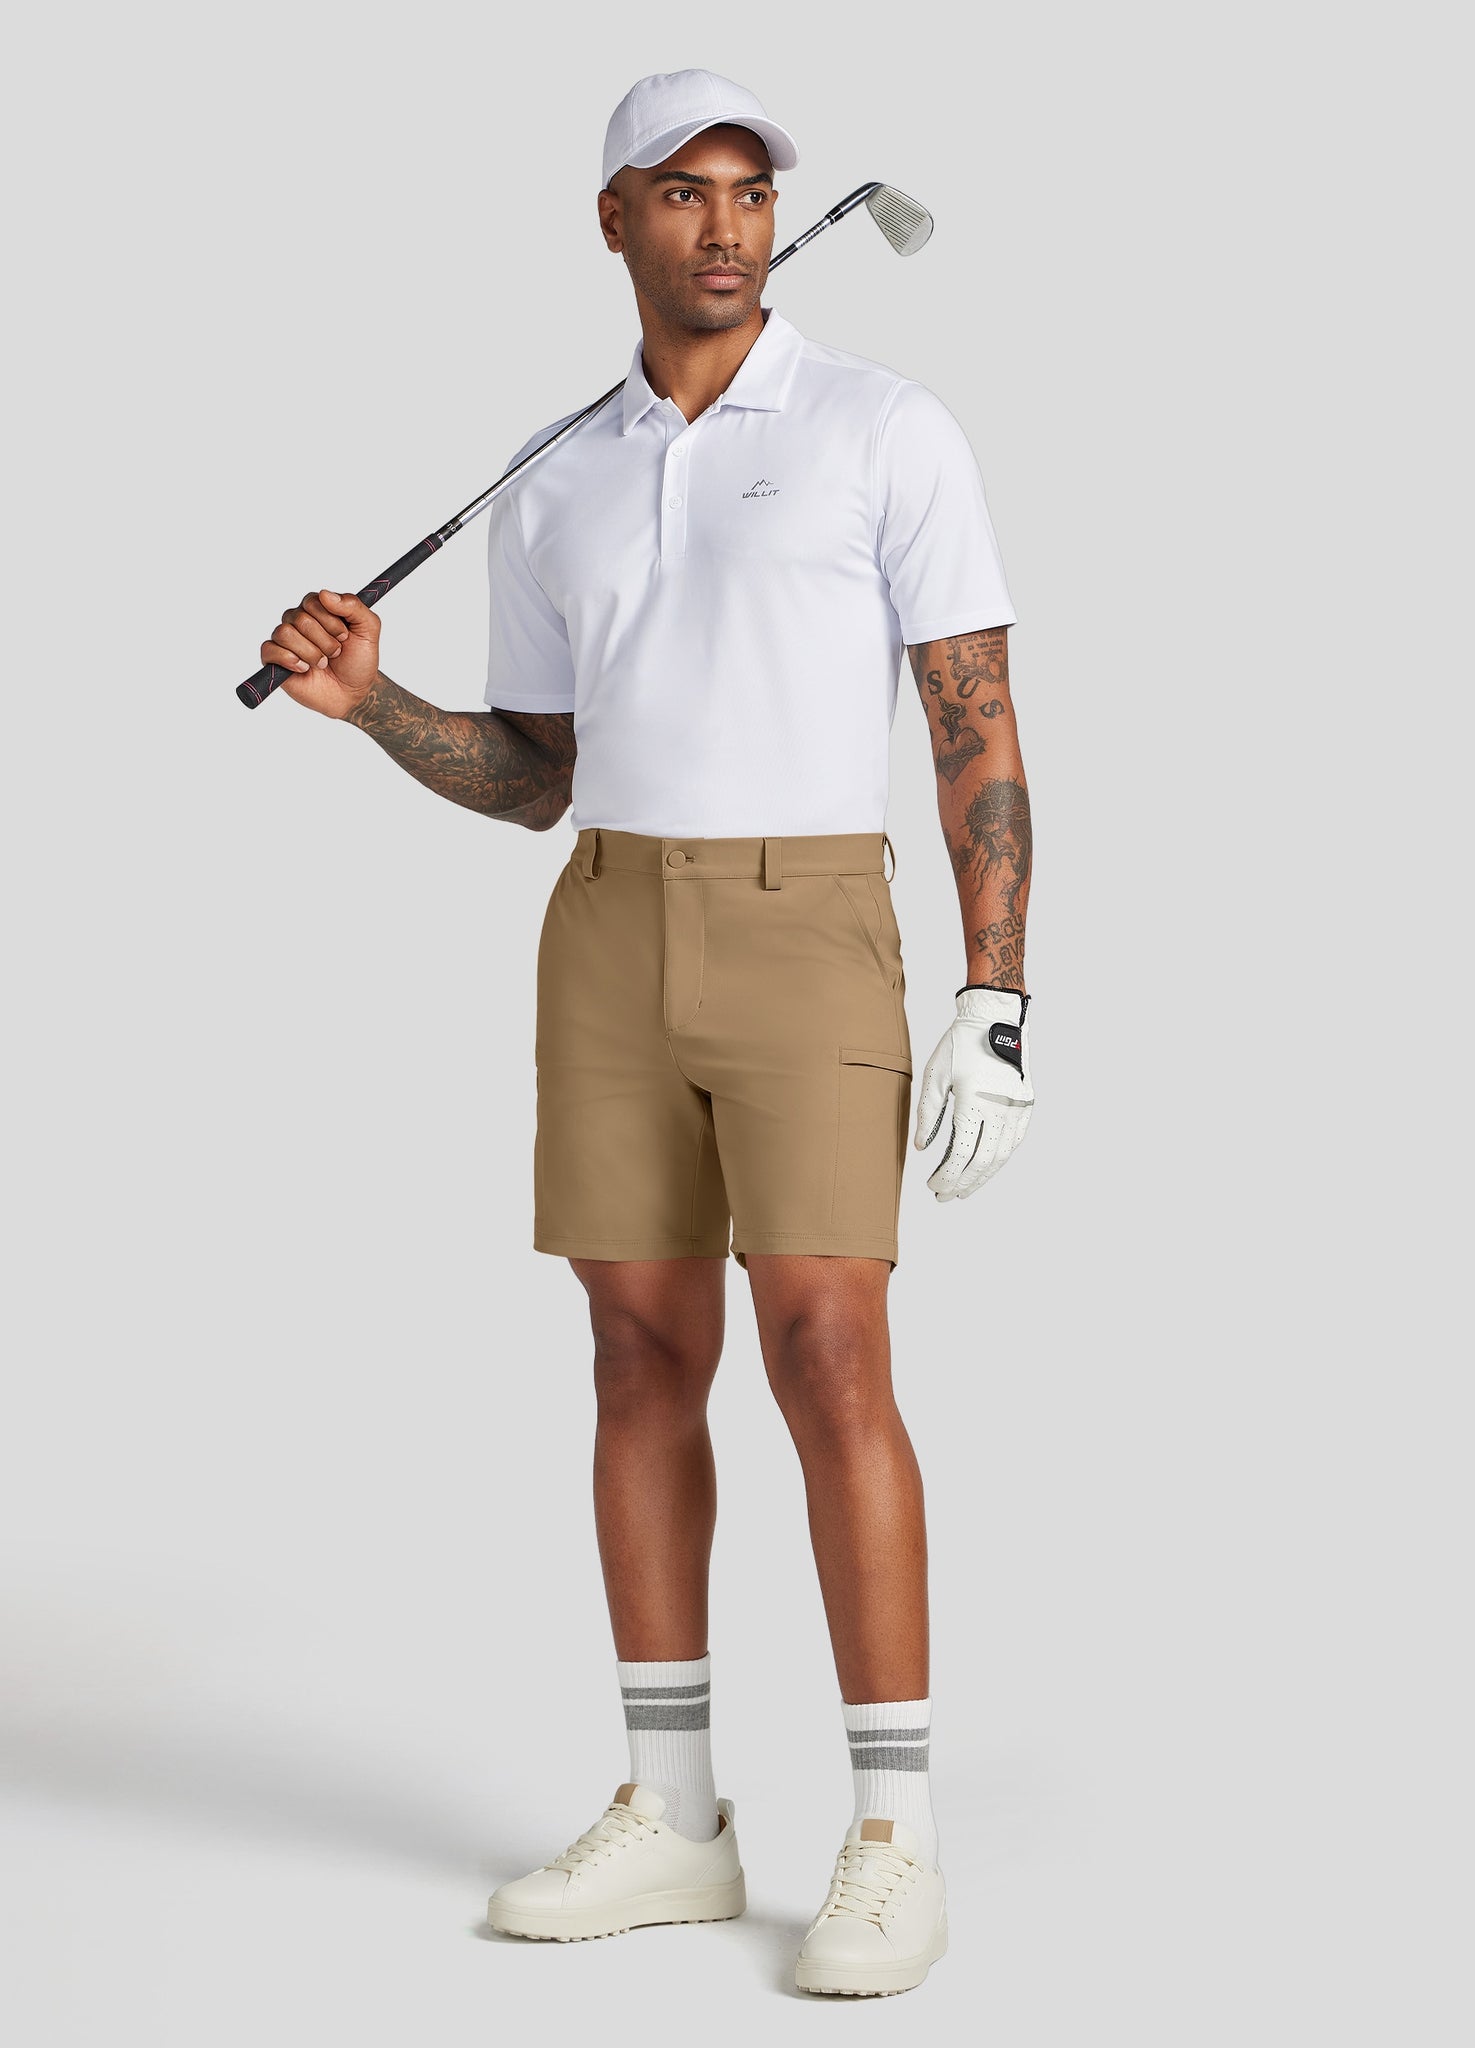 Men's Active Golf Shorts 7 Inseam